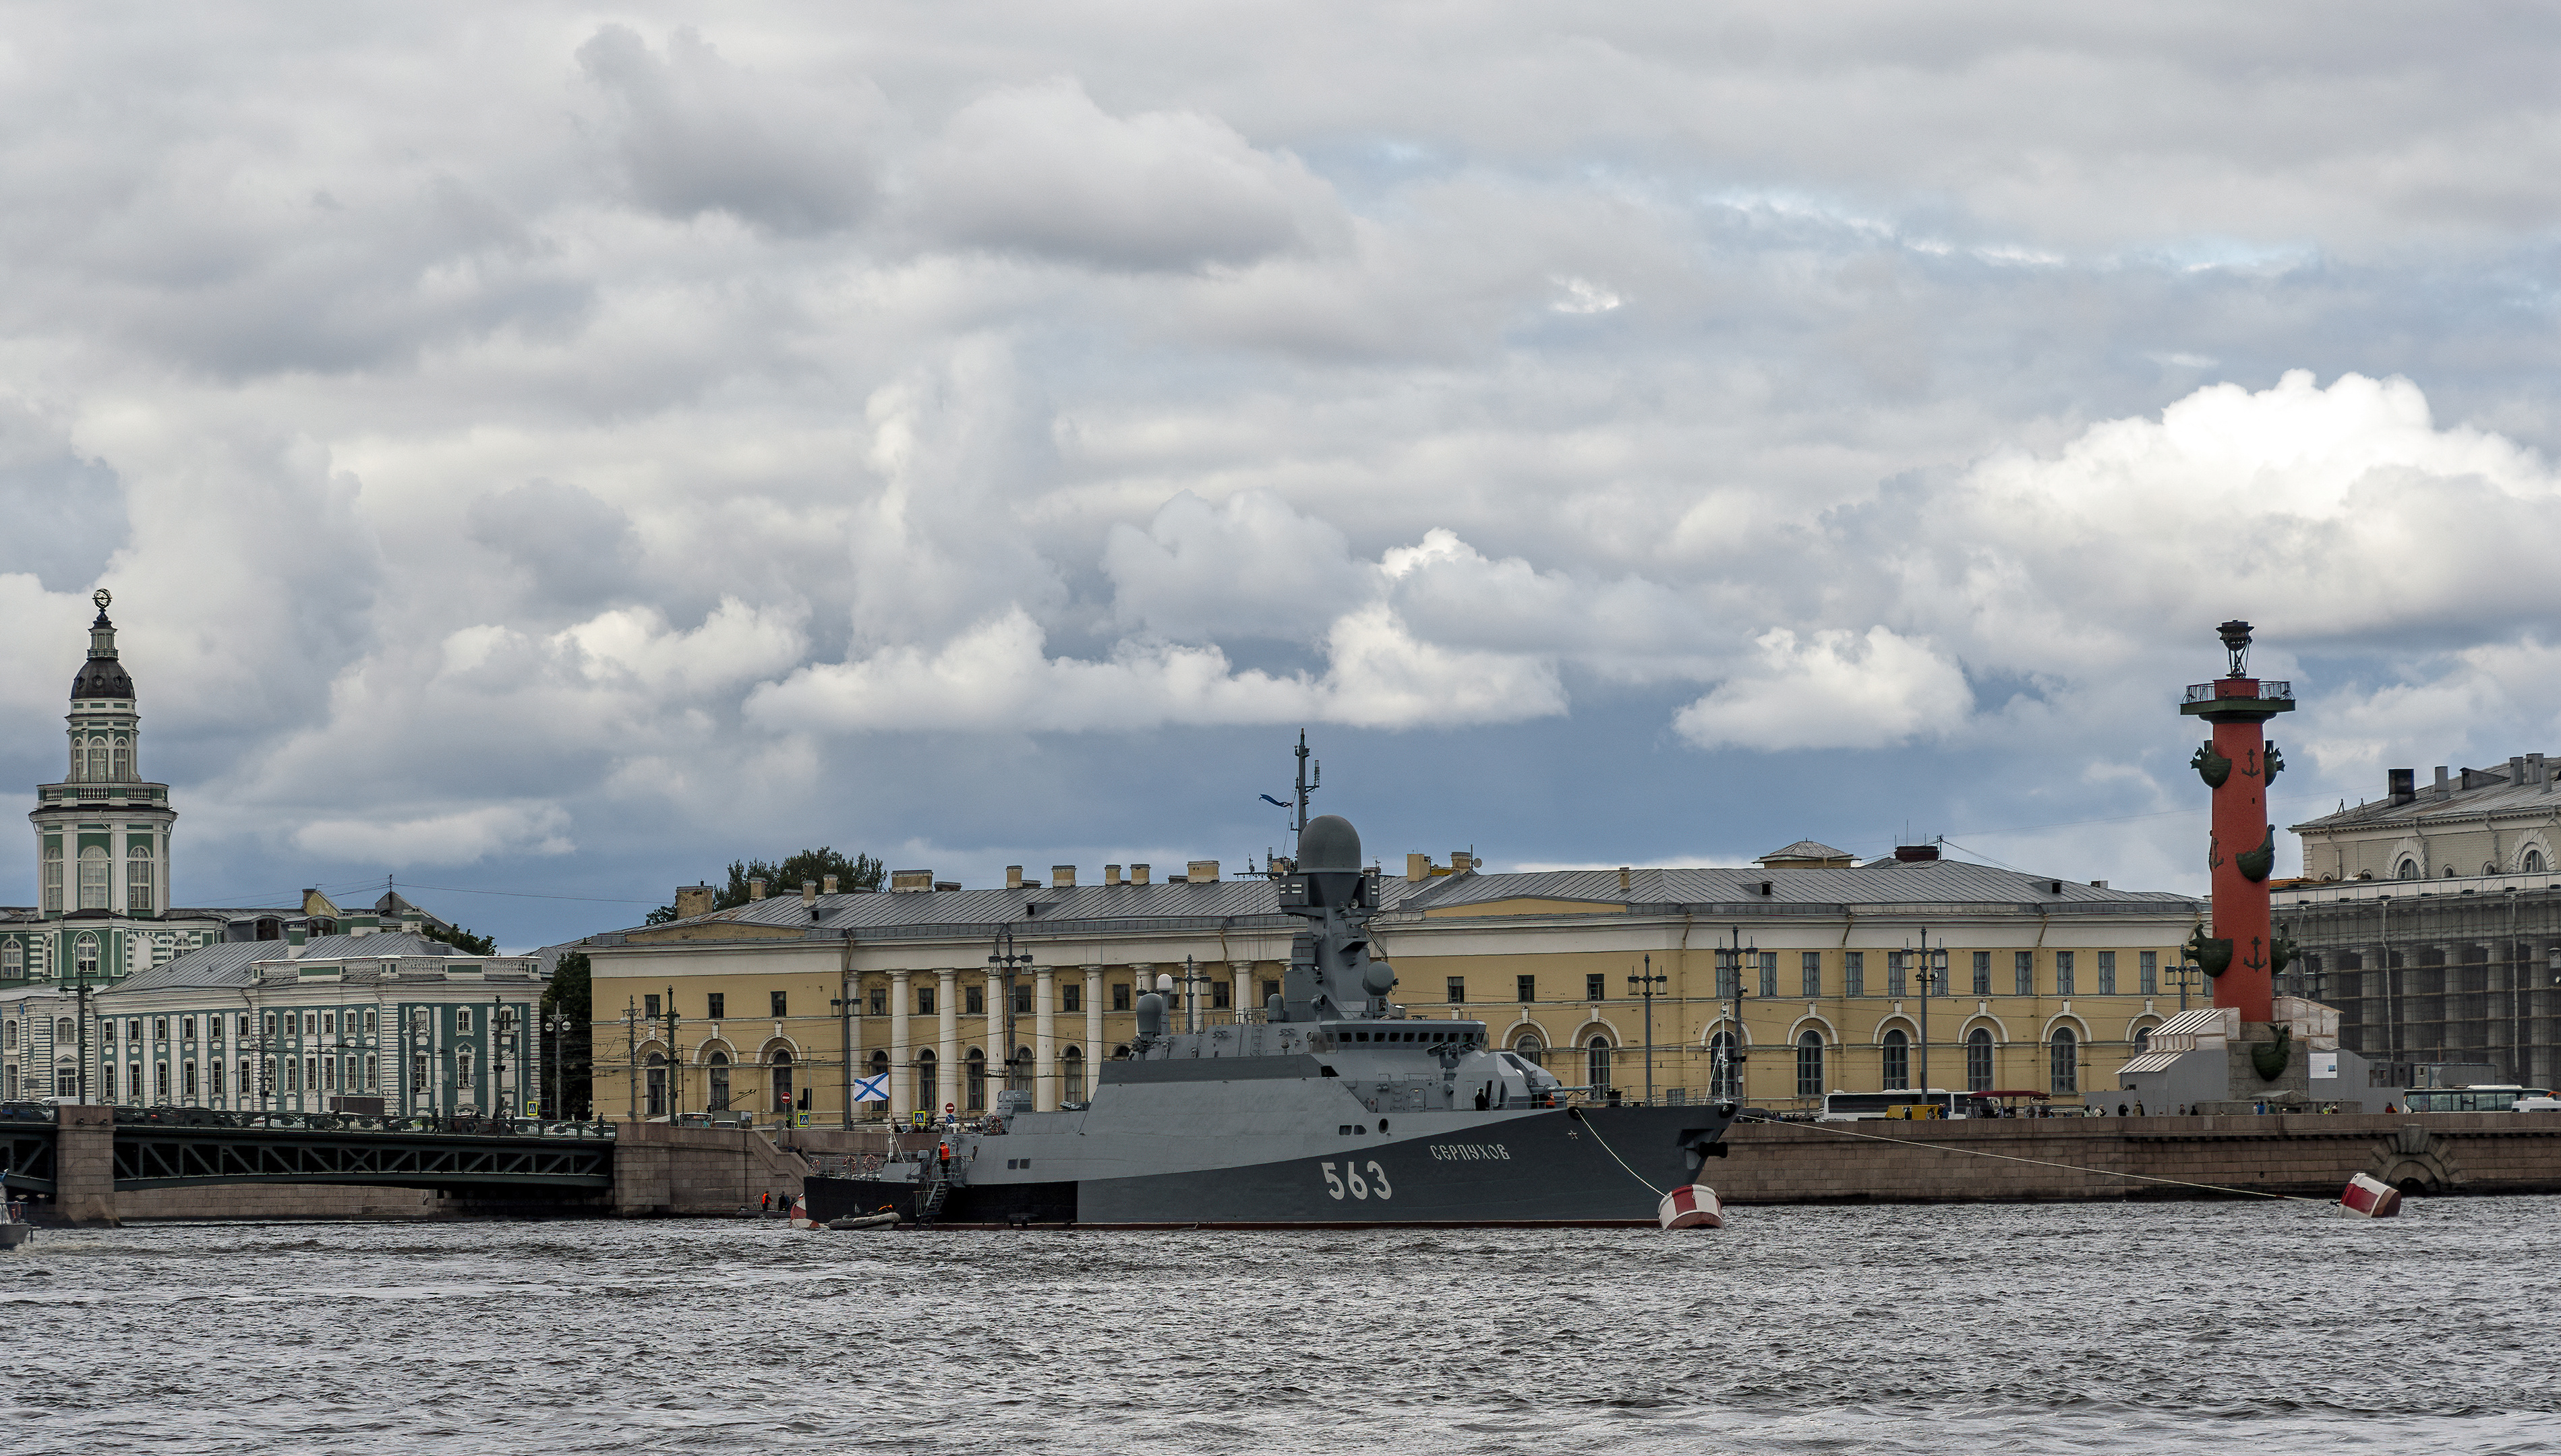 st petersberg russia navy ship 563-DeNoiseAI-clear